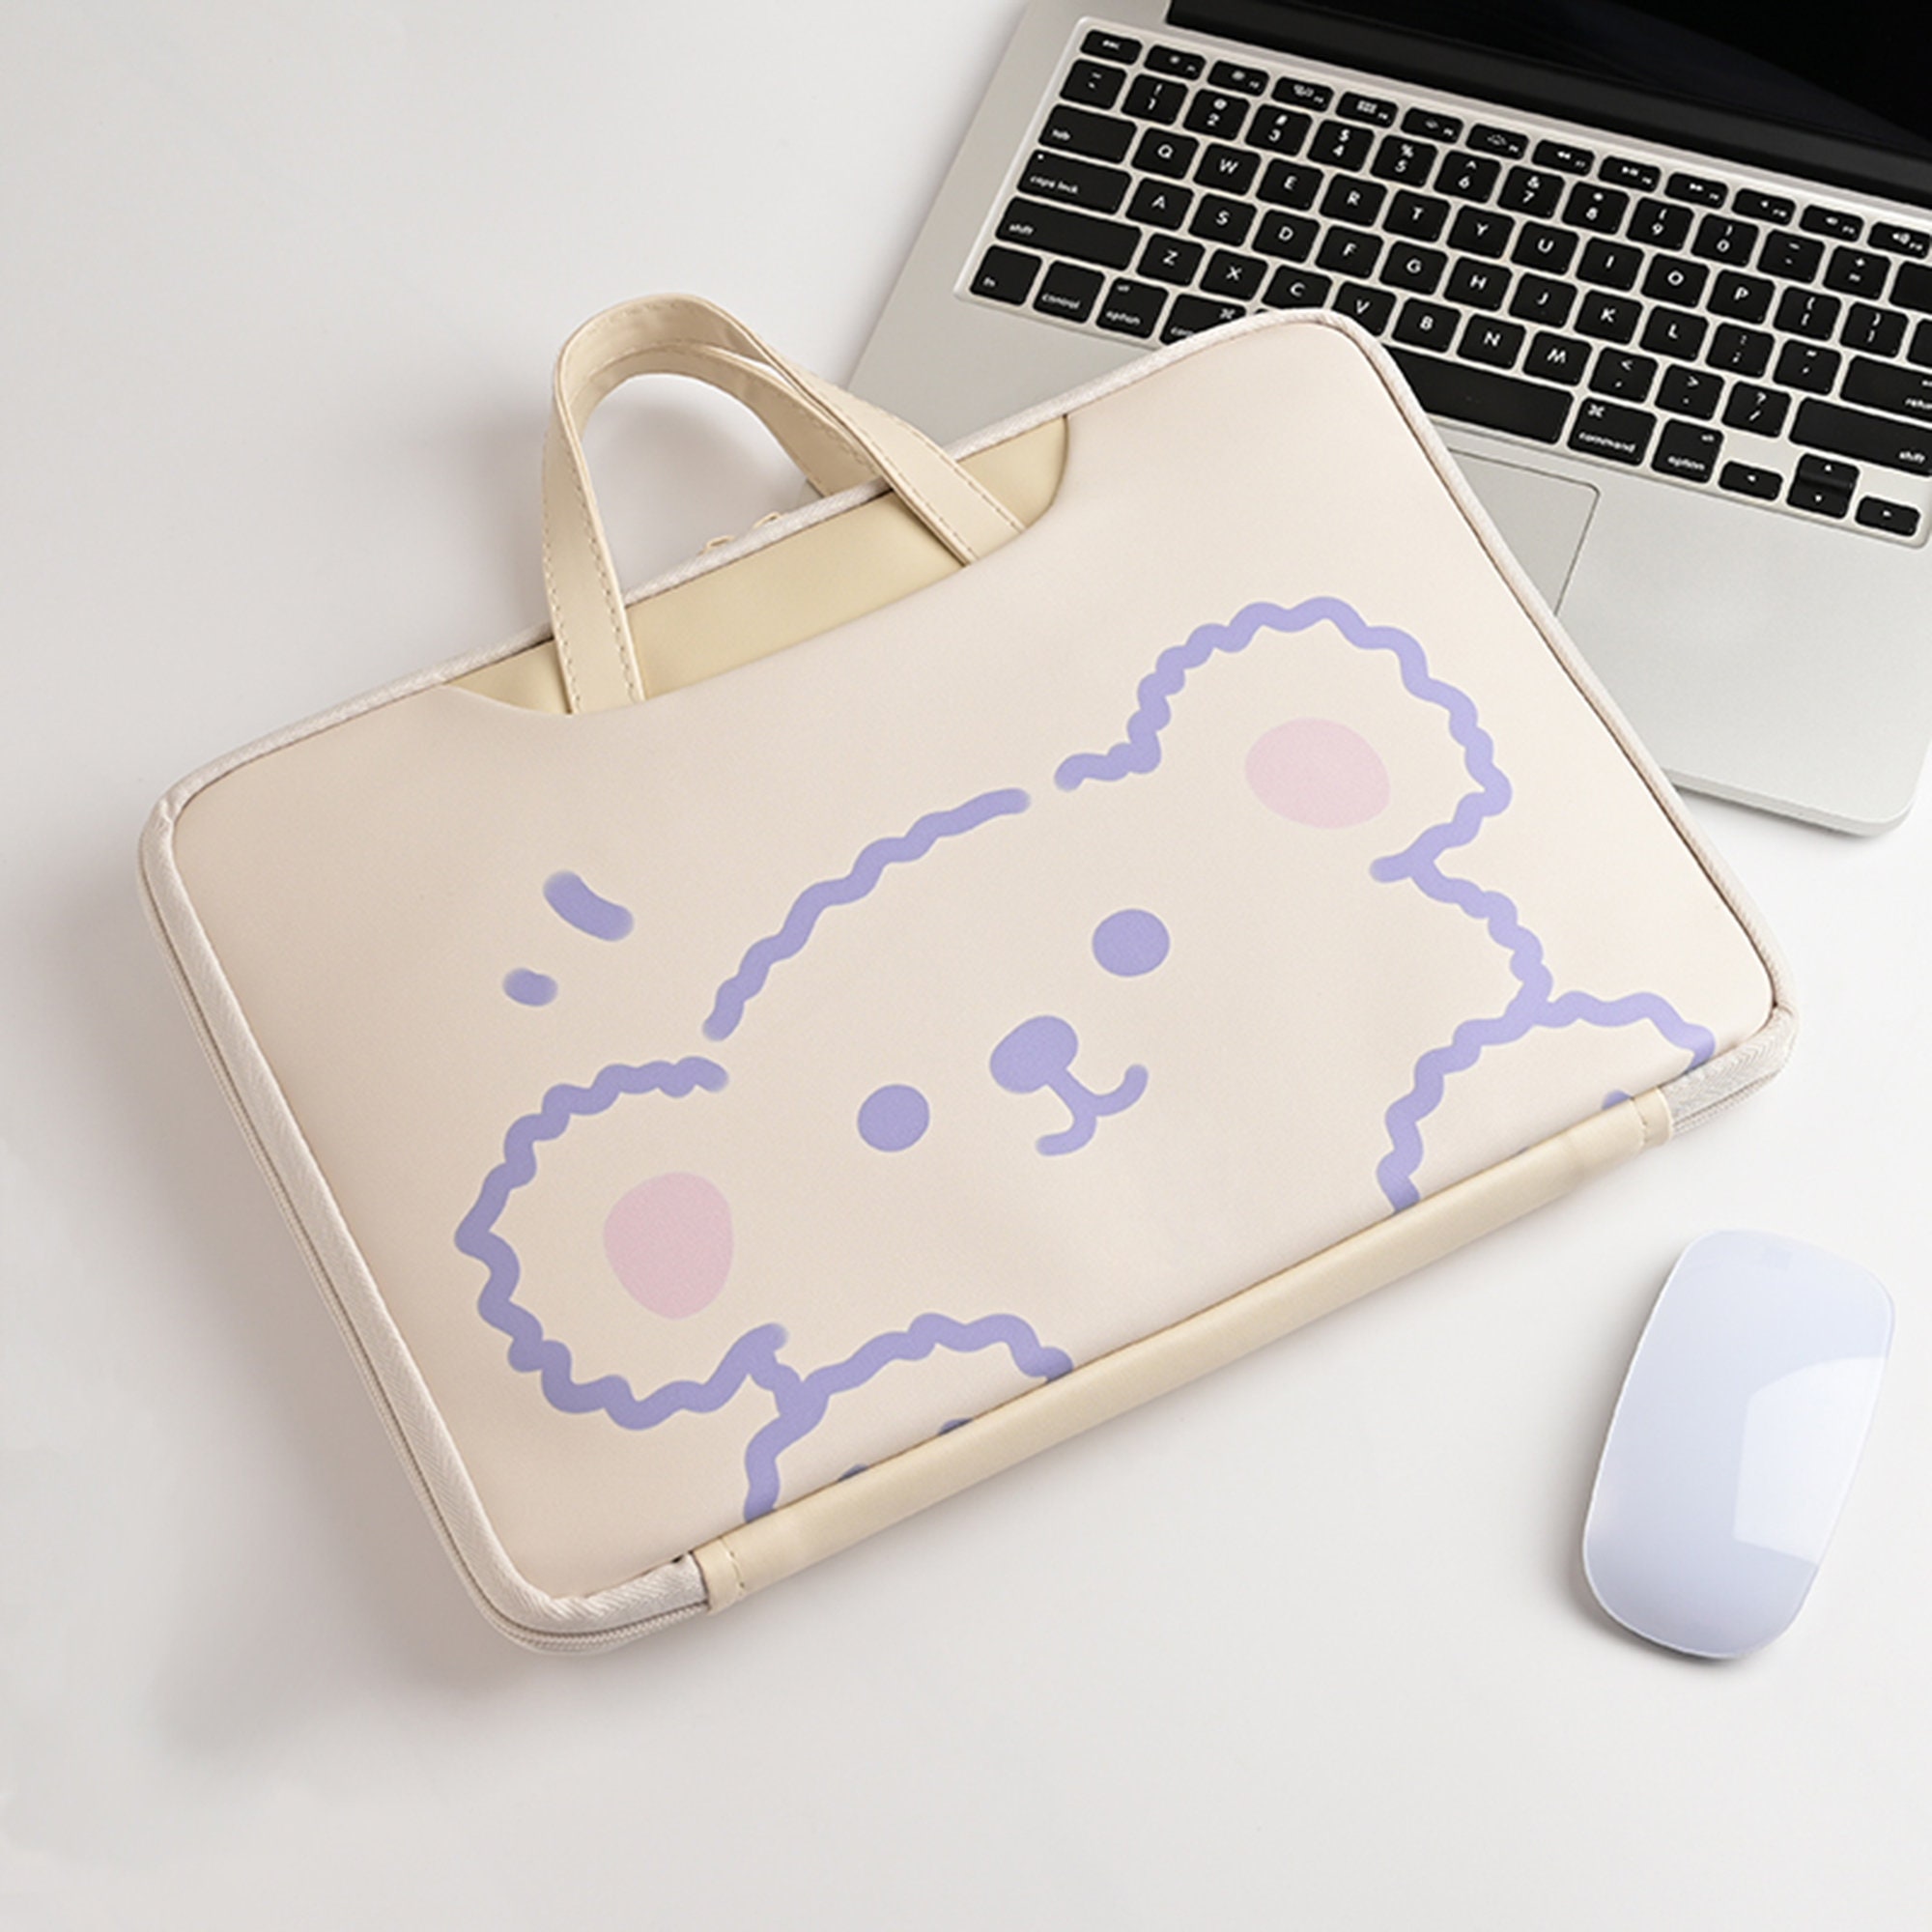 Jelly Bear Shaped iPad Mini Laptop Sleeves Covers Purses Skins Cute